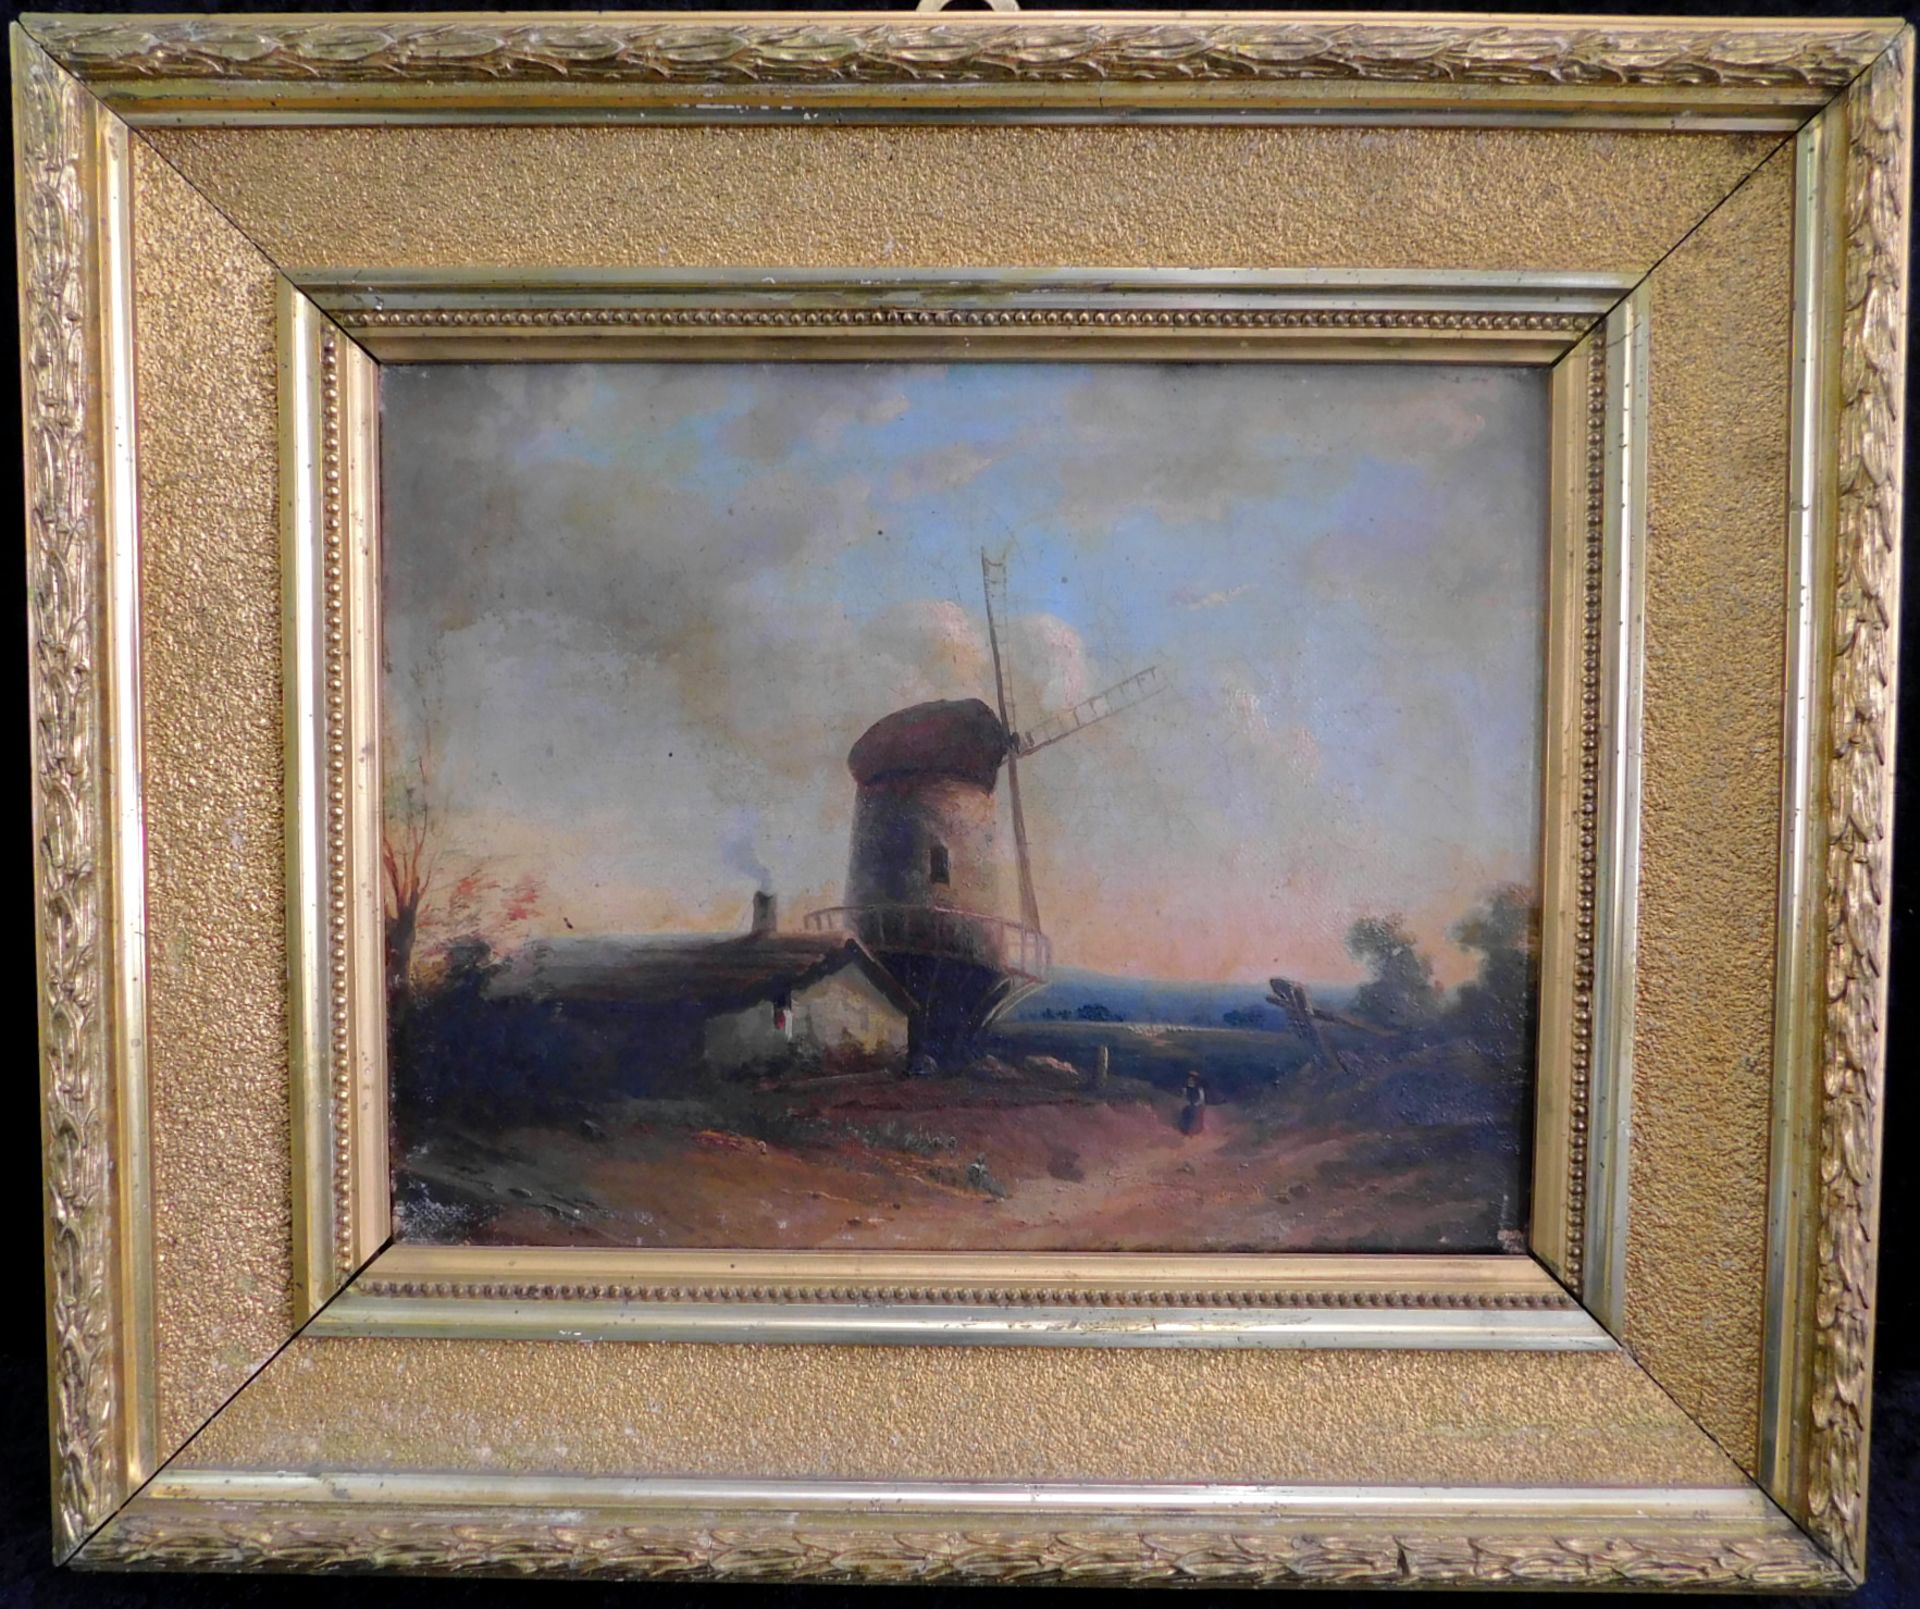 Unb. Künstler "Windmühle", Öl auf Leinwand, um 1880, unsig.,19,5 x 26,5 cm, m.R.